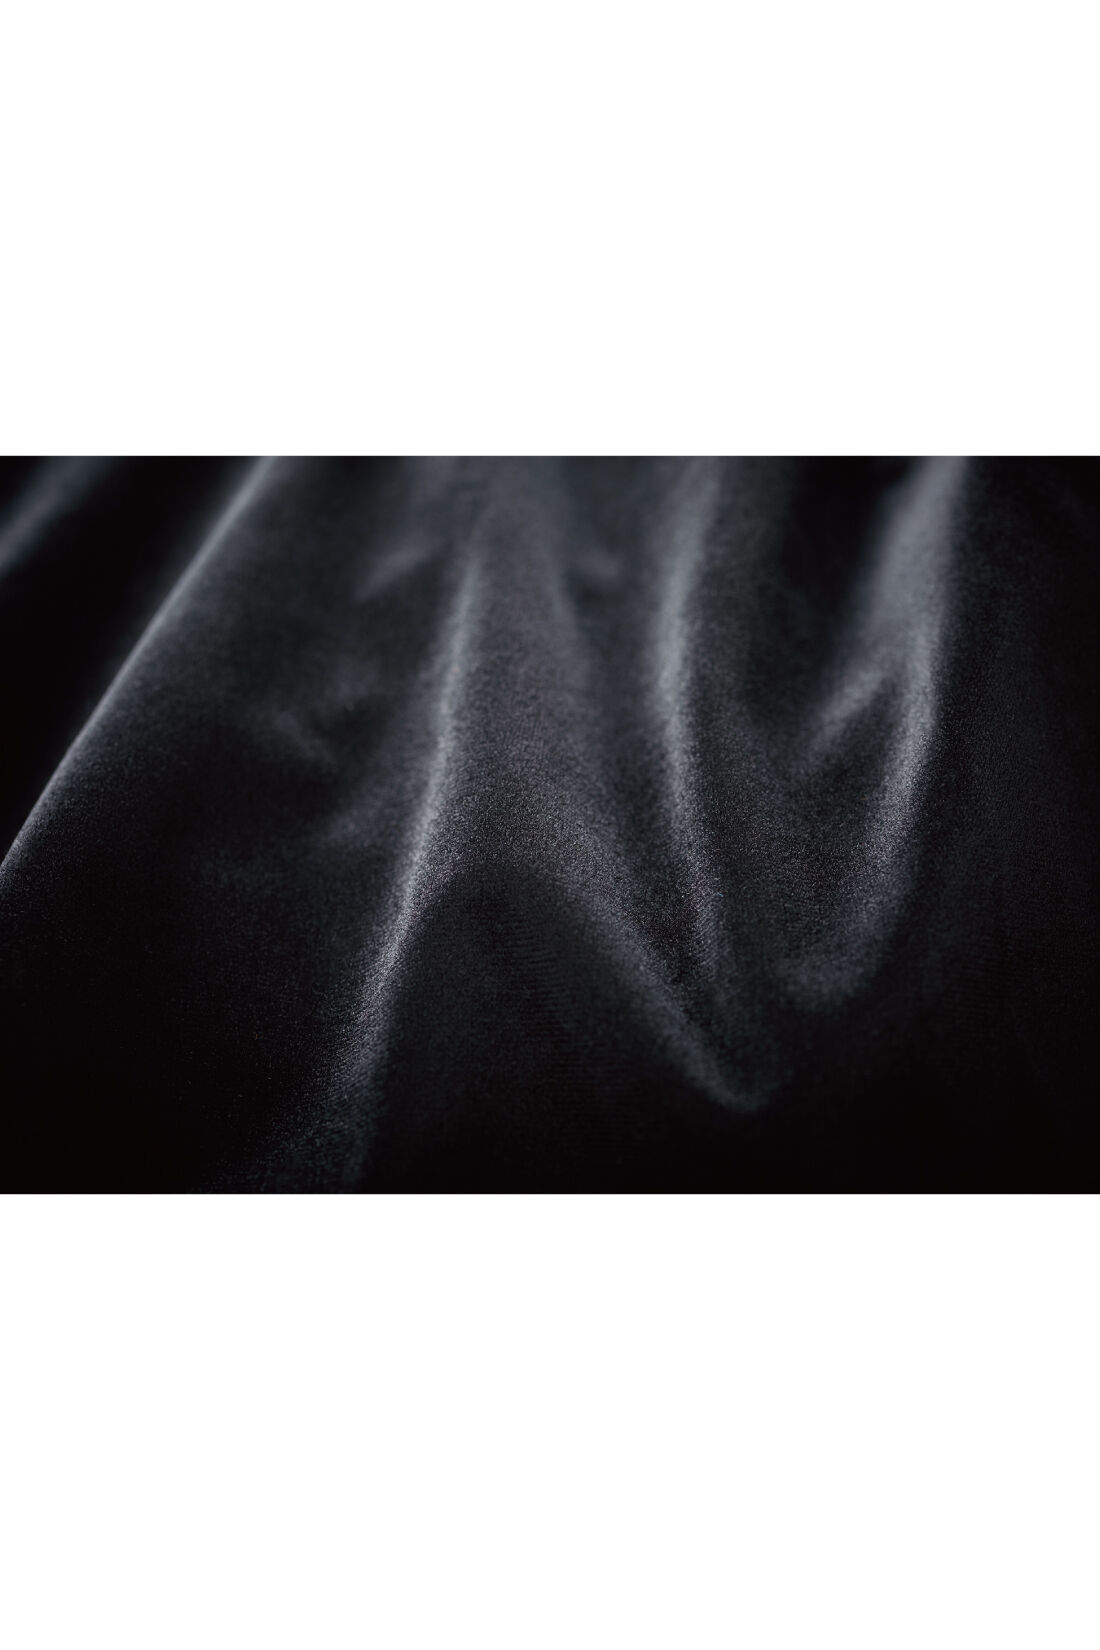 MEDE19F|MEDE19F×SCREEN KAORI　ベロアカットソーオールインワン〈ブラック〉|ストレッチがきいた、しなやかなカットソーベロア素材。軽い着用感も魅力。